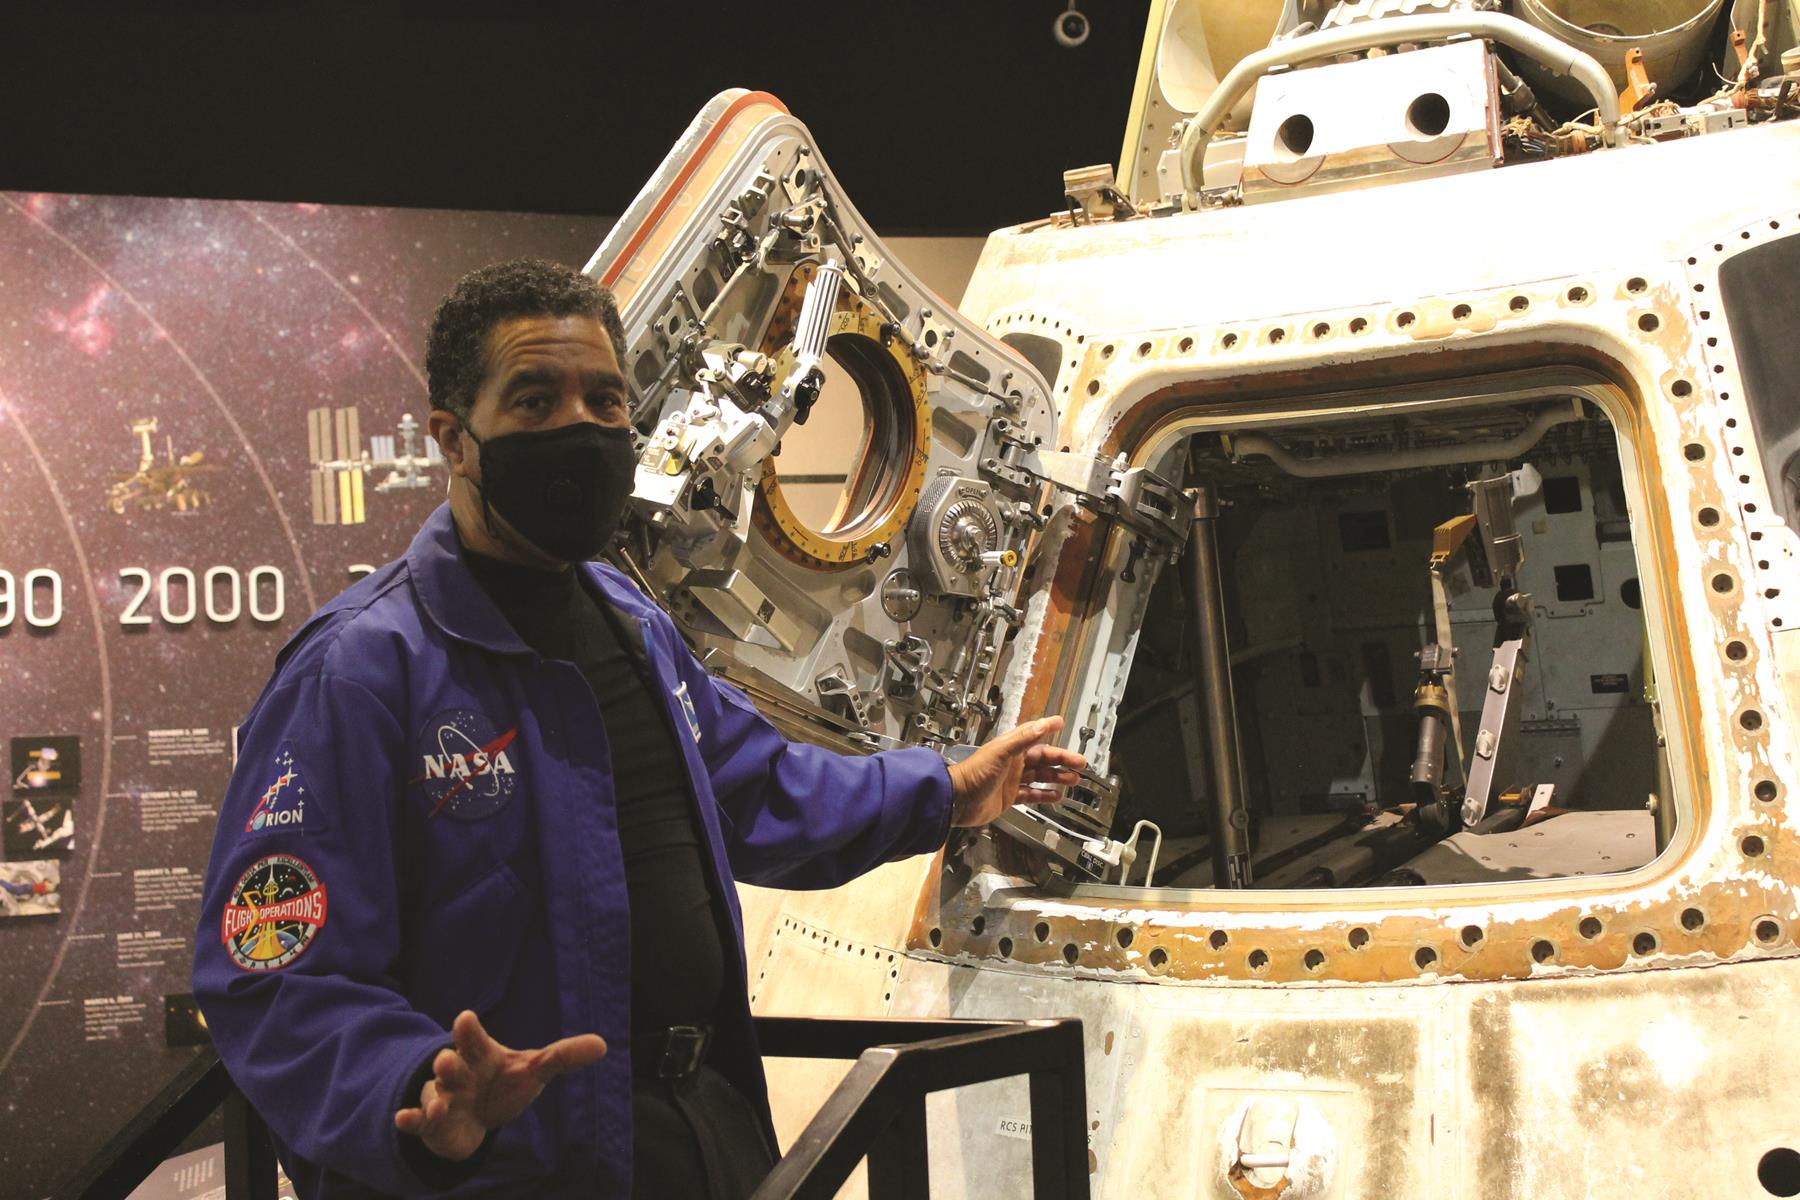 A STEM Learning staffer, JonDarr Bradshaw, conducts a “Capsule Chat” alongside the Apollo Command Module. Ohio aviation